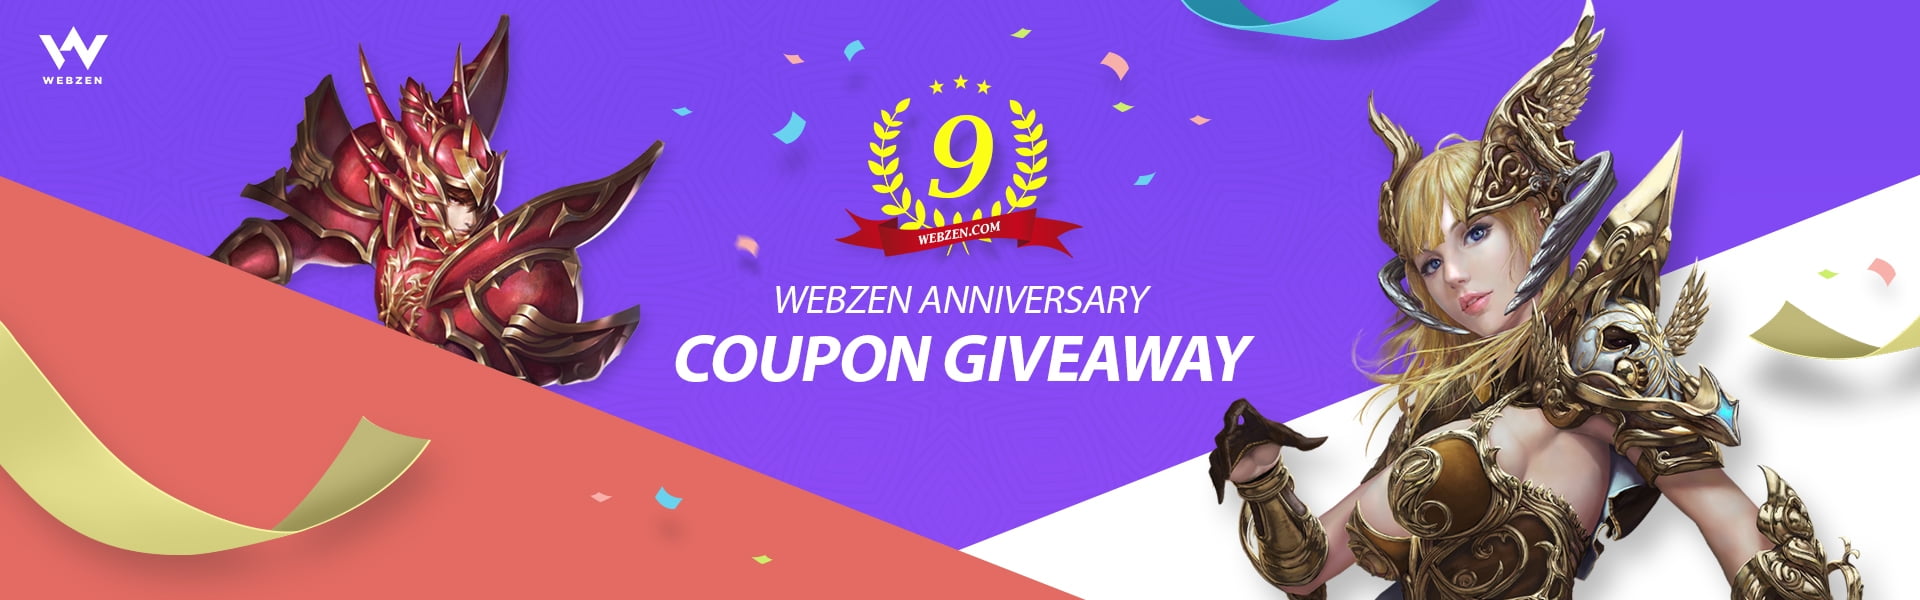 Webzen.com's 9th Anniversary Coupon Giveaway 12